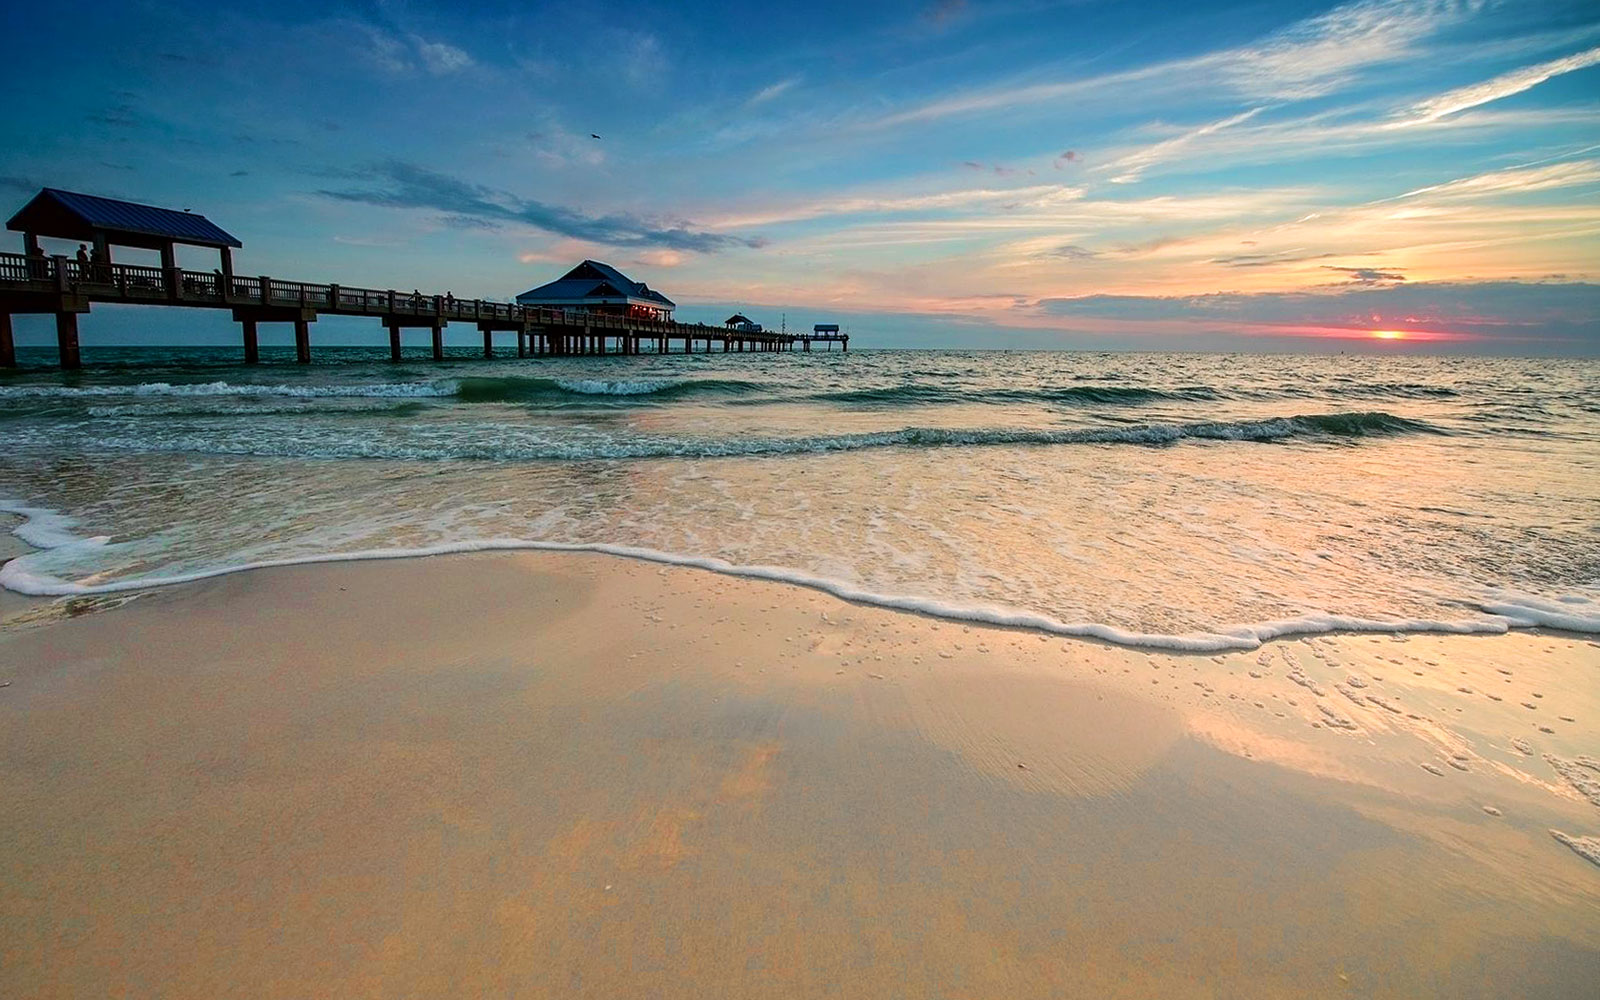 The Best Beaches in Florida | Beaches near orlando, Tampa 